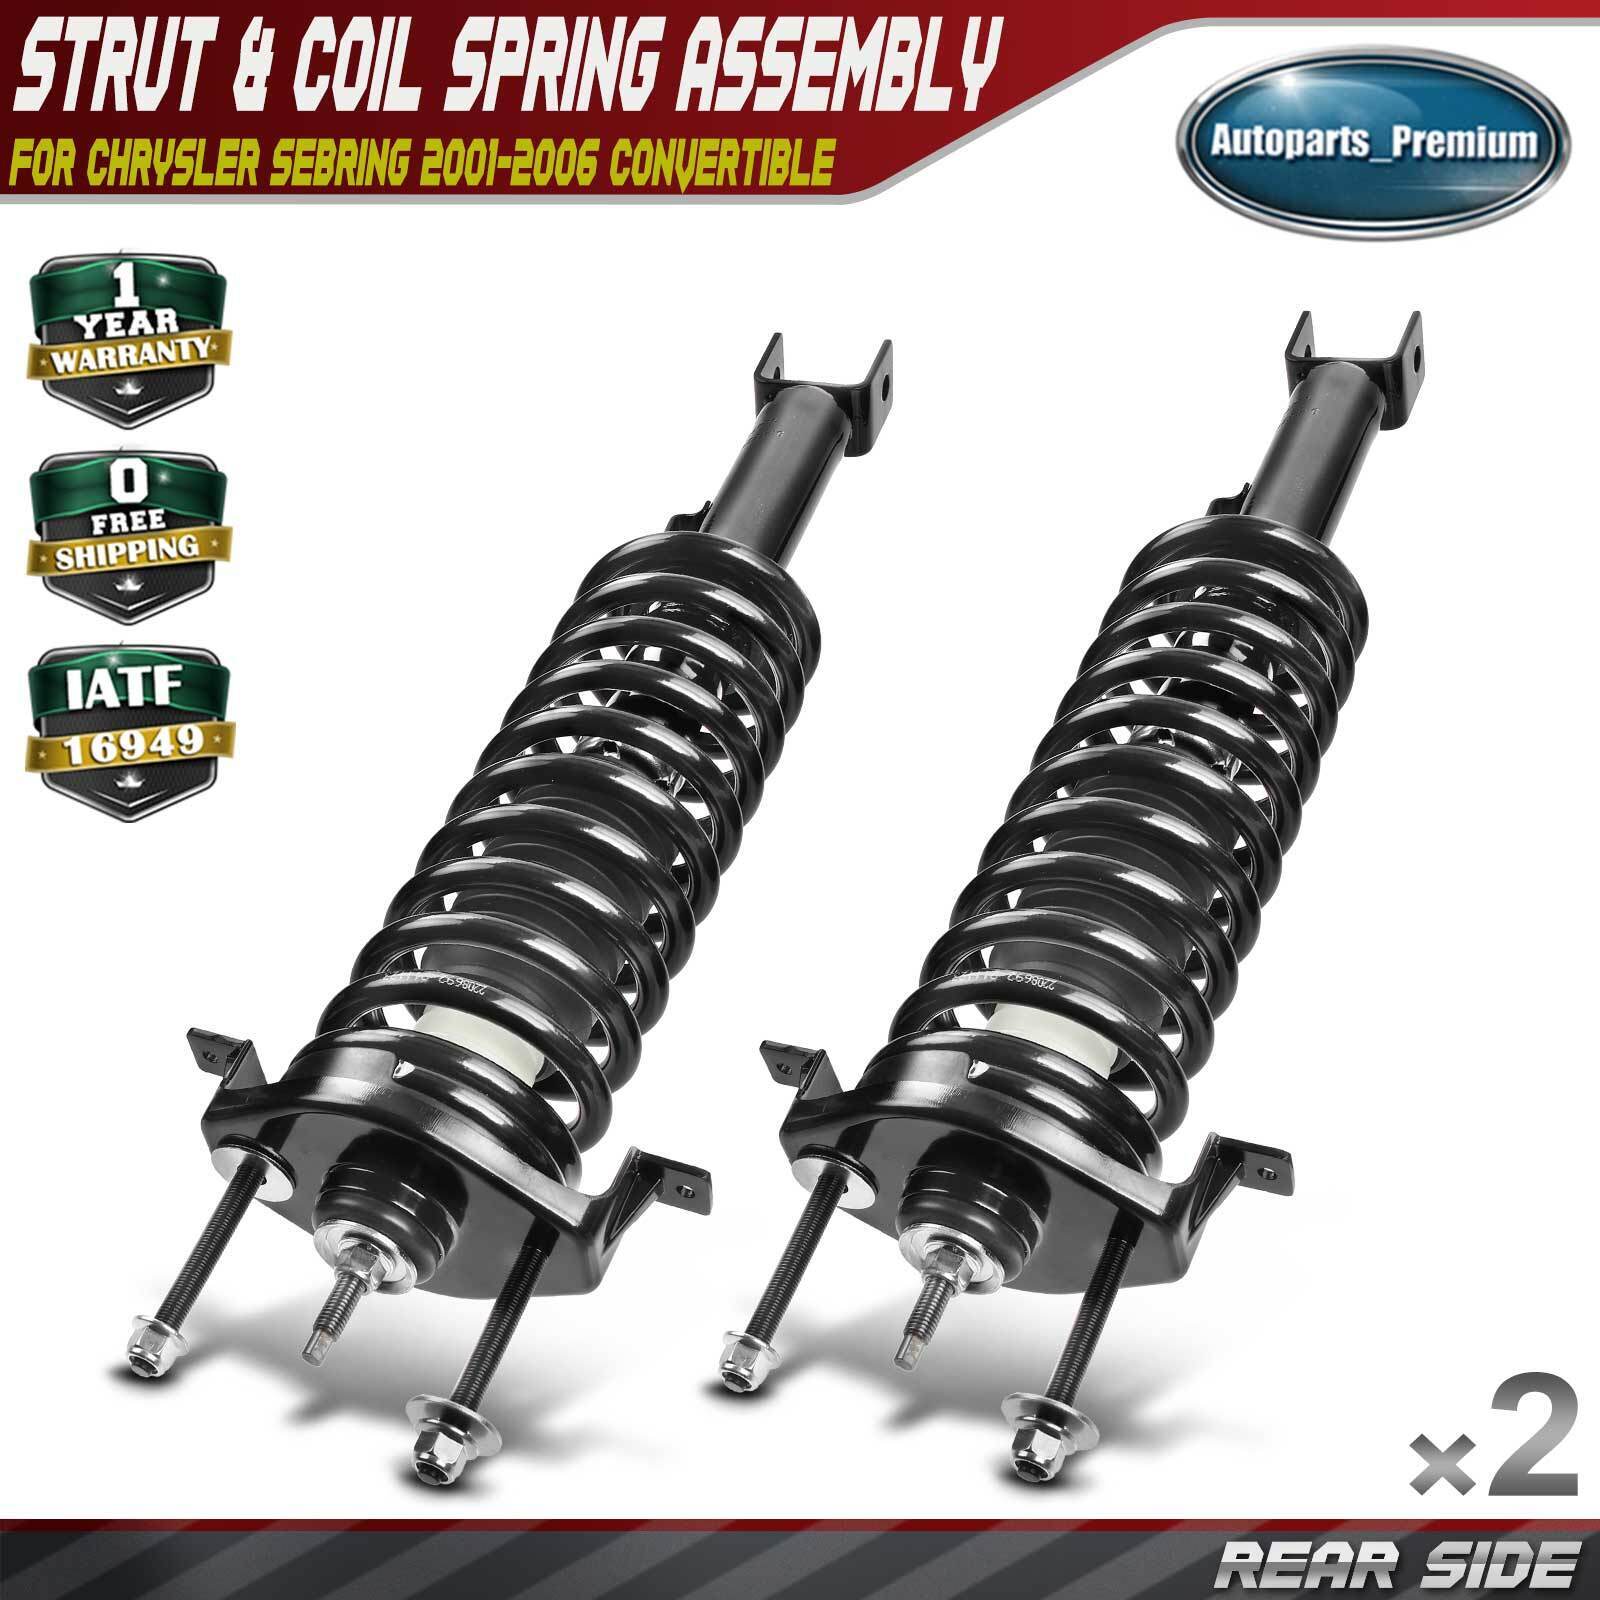 2x Rear Complete Strut & Coil Assembly for Chrysler Sebring 01-06 Convertible